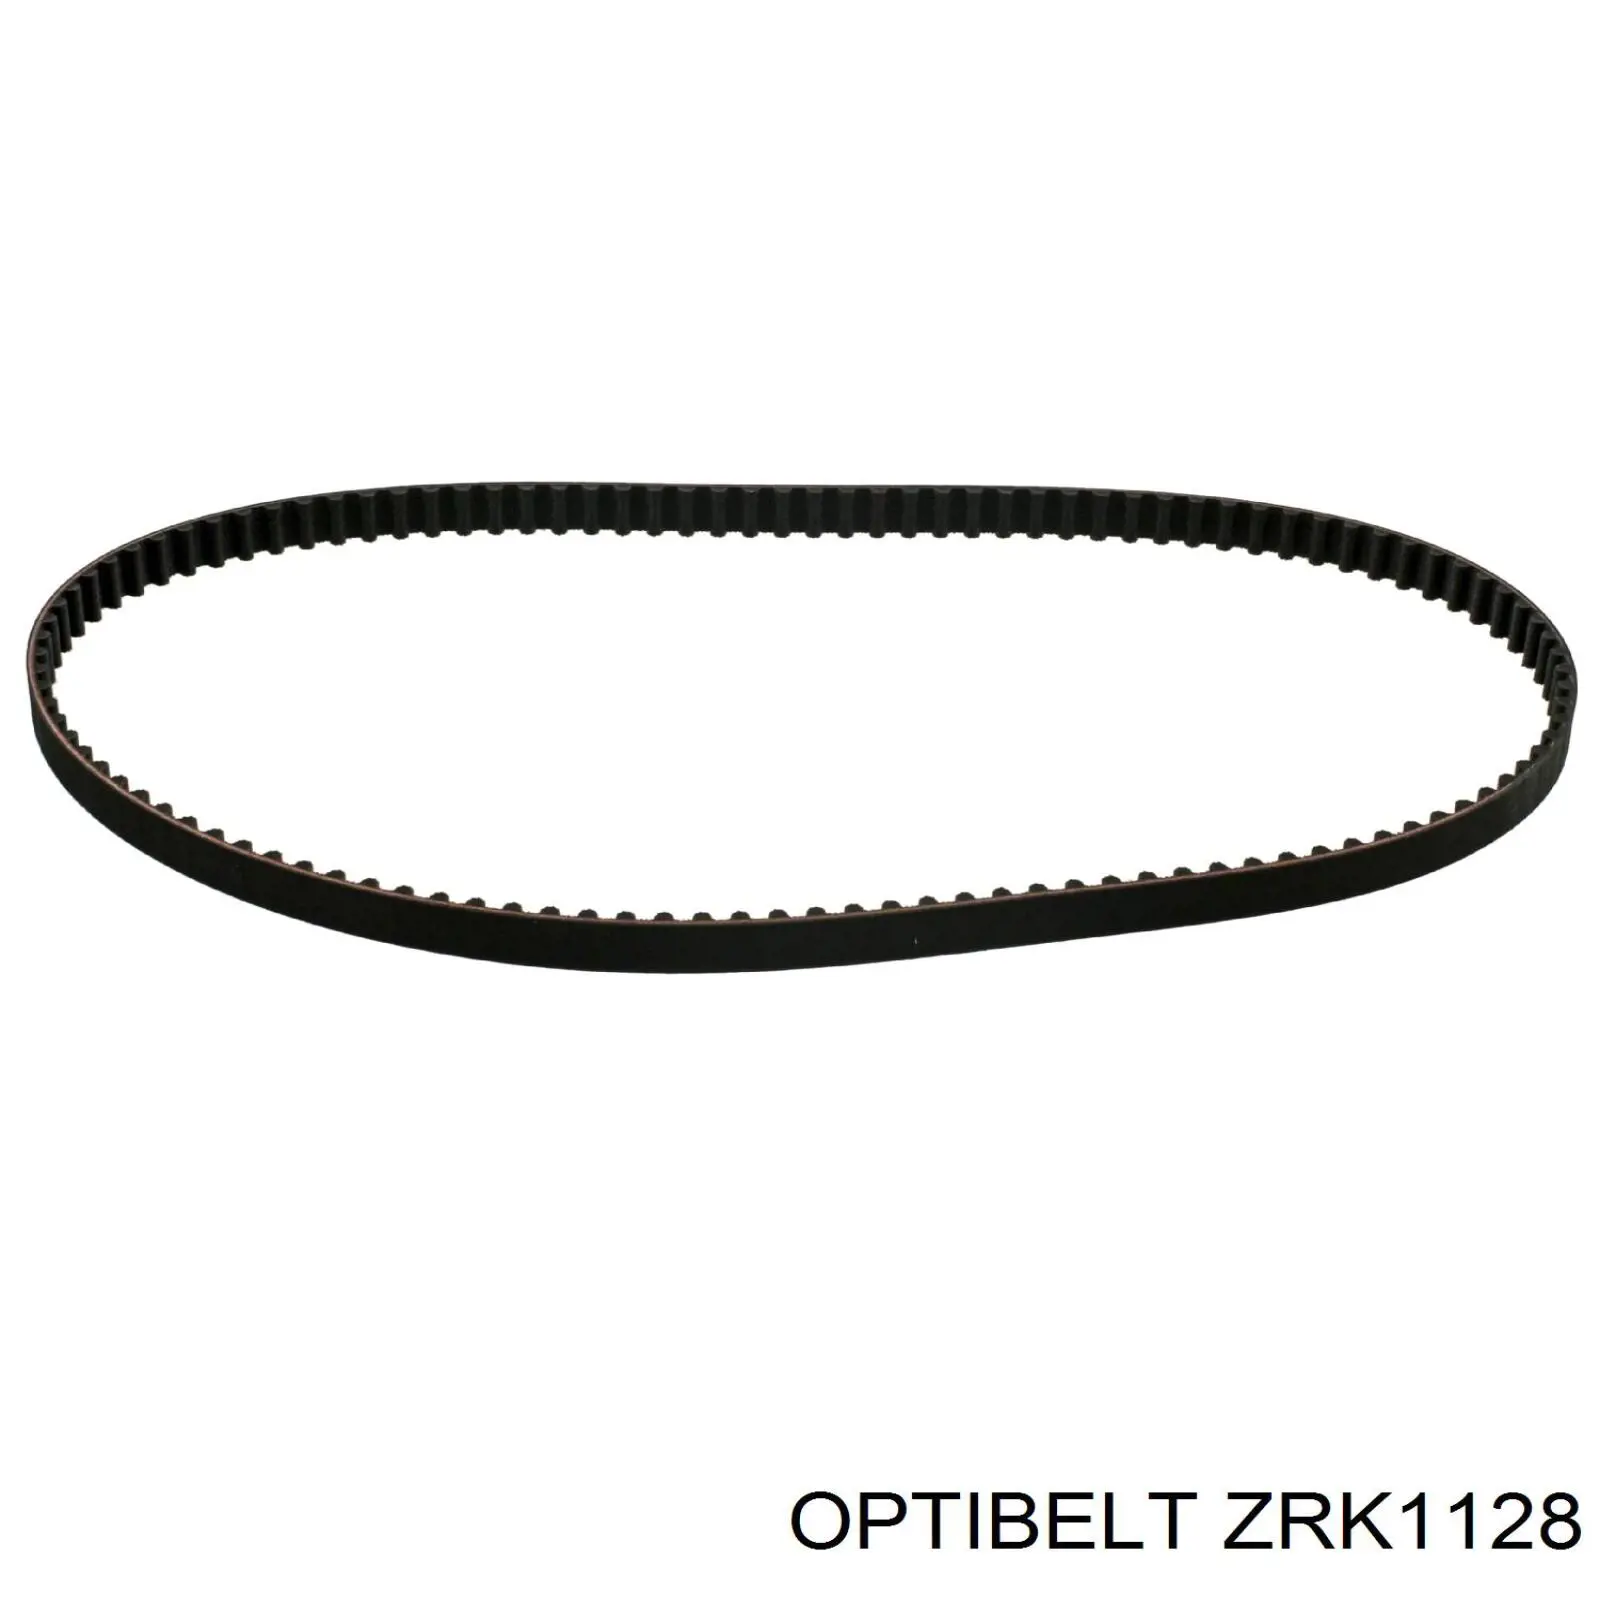 ZRK1128 Optibelt correa distribucion